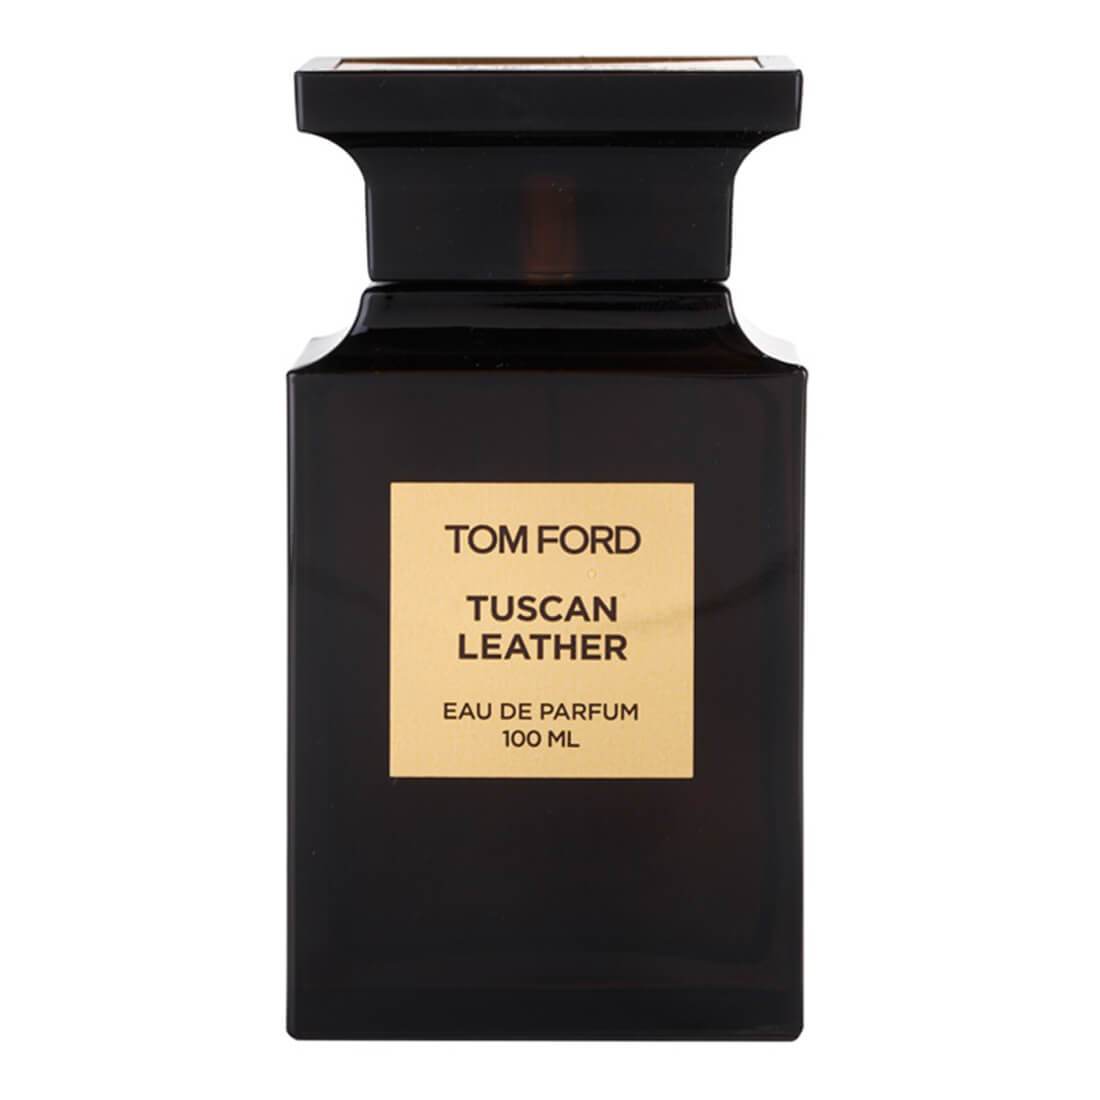 Tom Ford Premium Luxury Fragrances. – FridayCharm.com